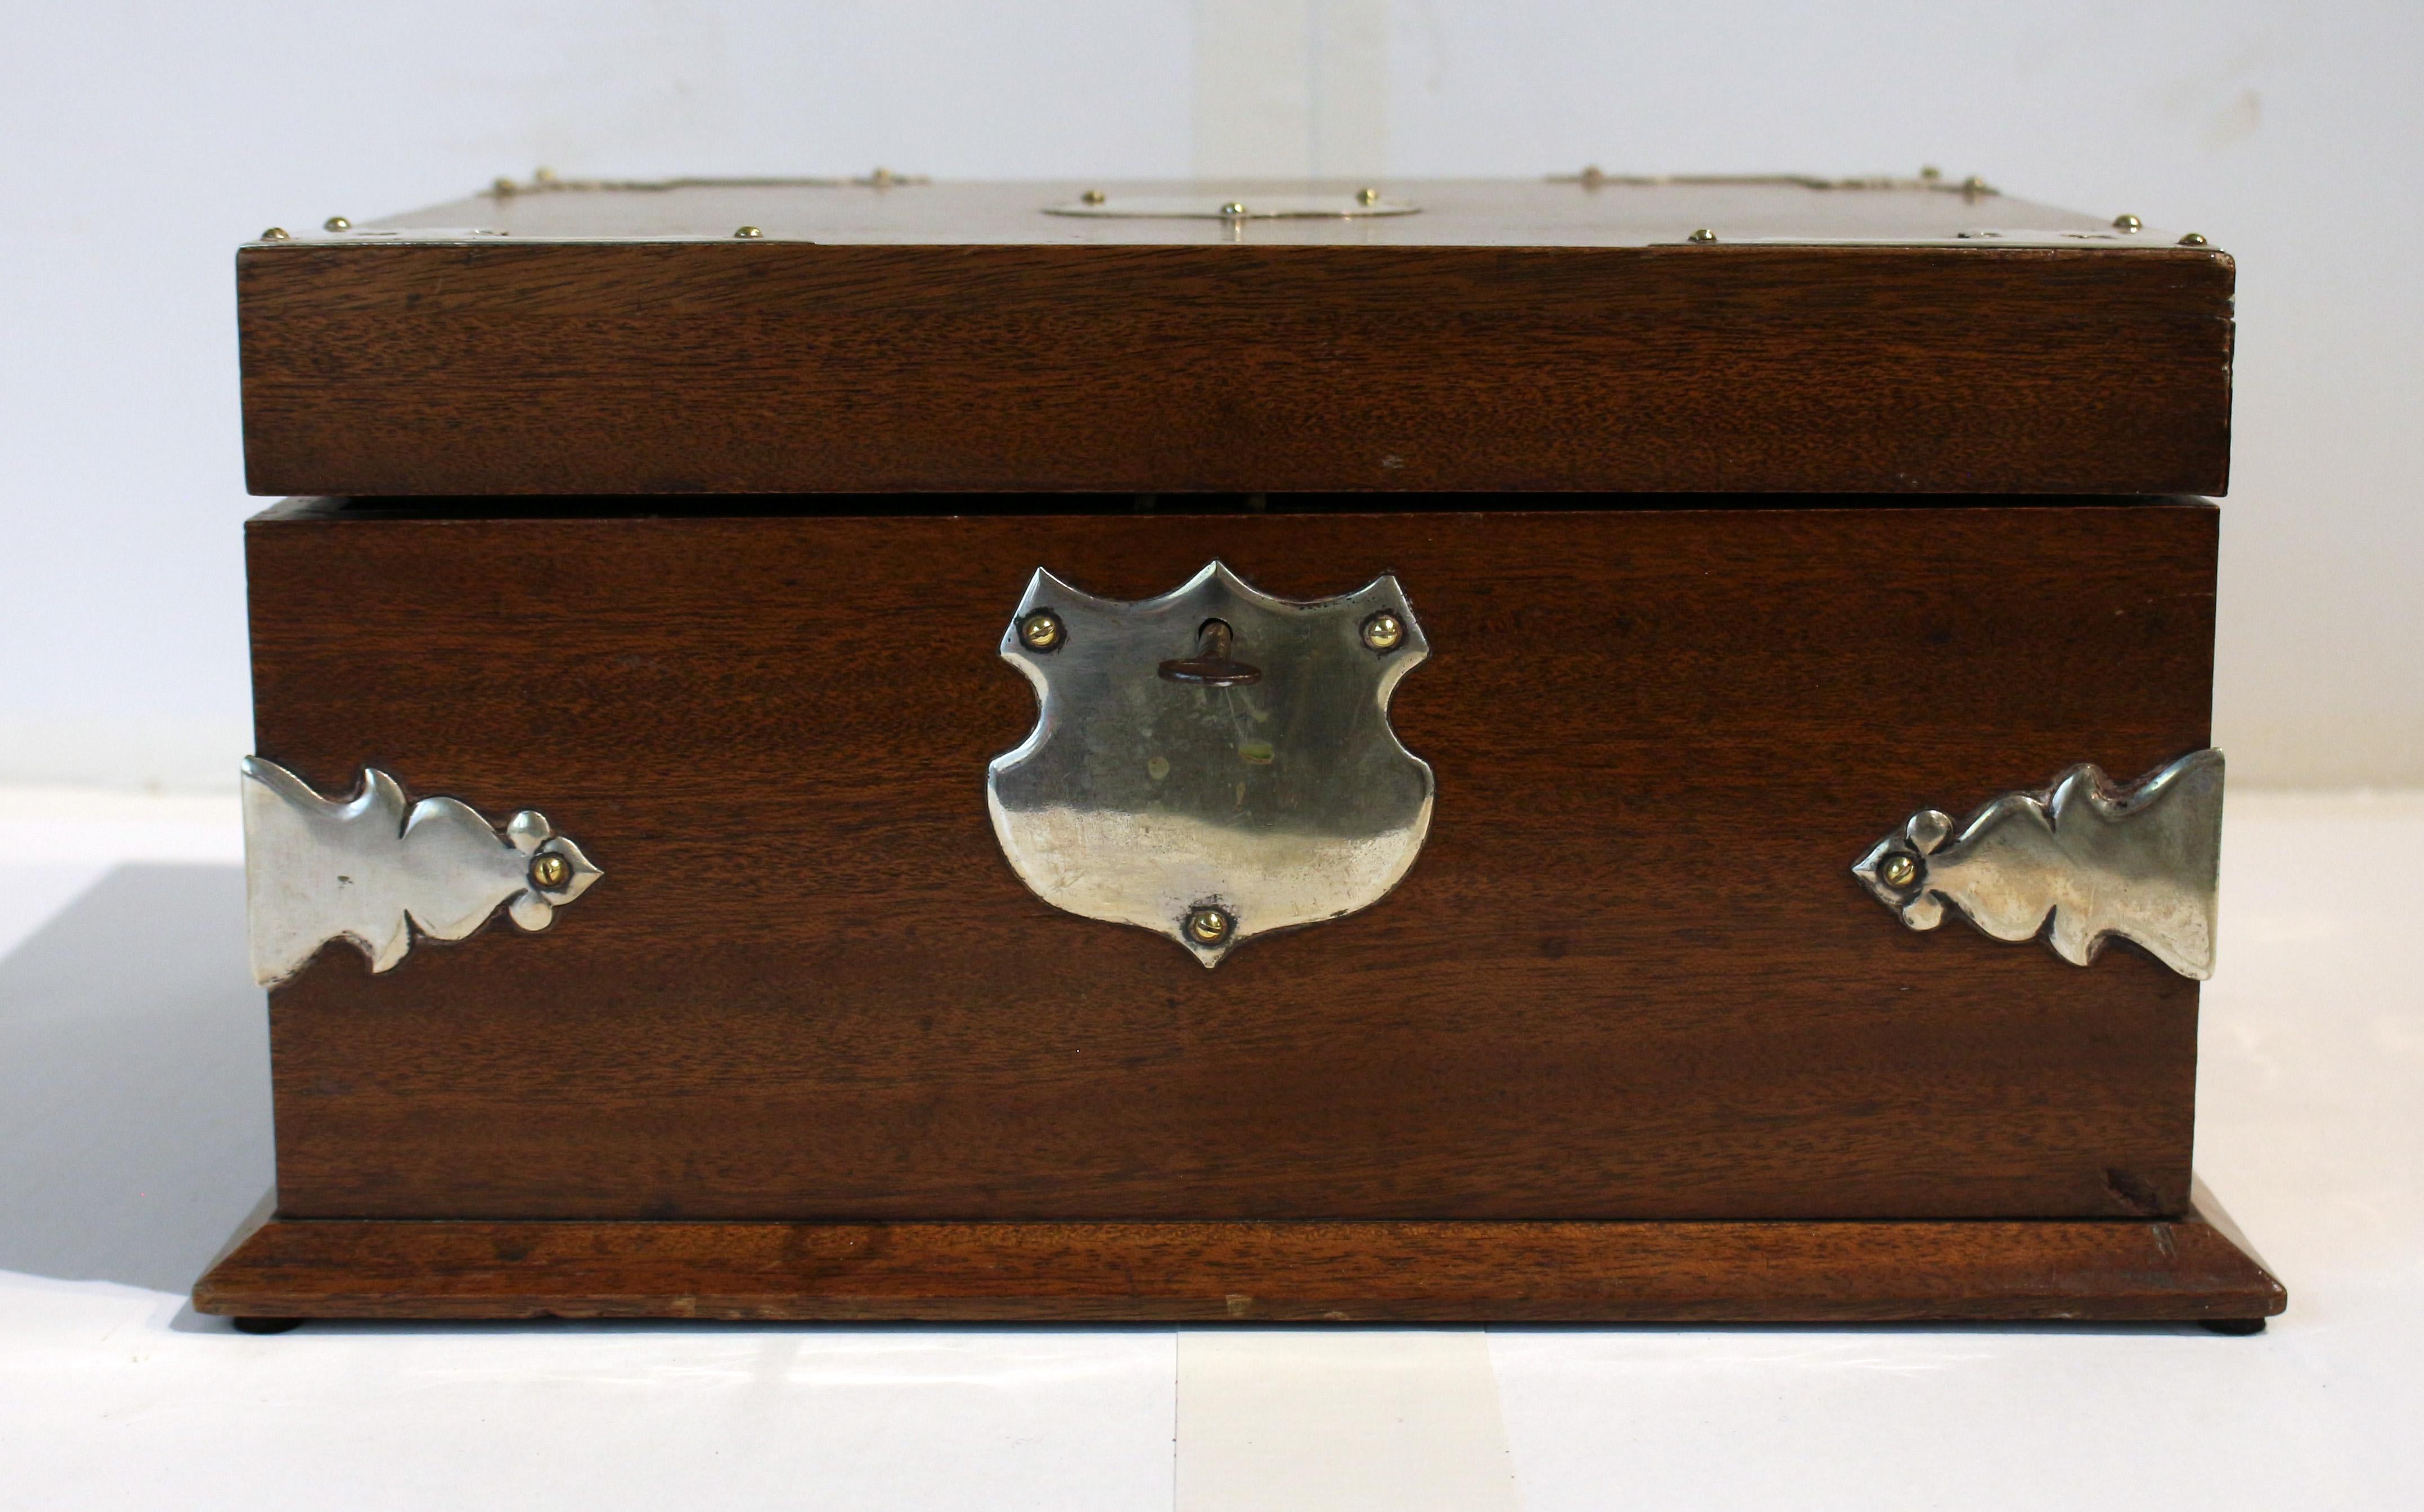 Circa 1870s humidor box with silverplated mounts, English. Mahogany. Shield escutcheon & central mount, corner mounts & cut work backplate handles. 13 1/8